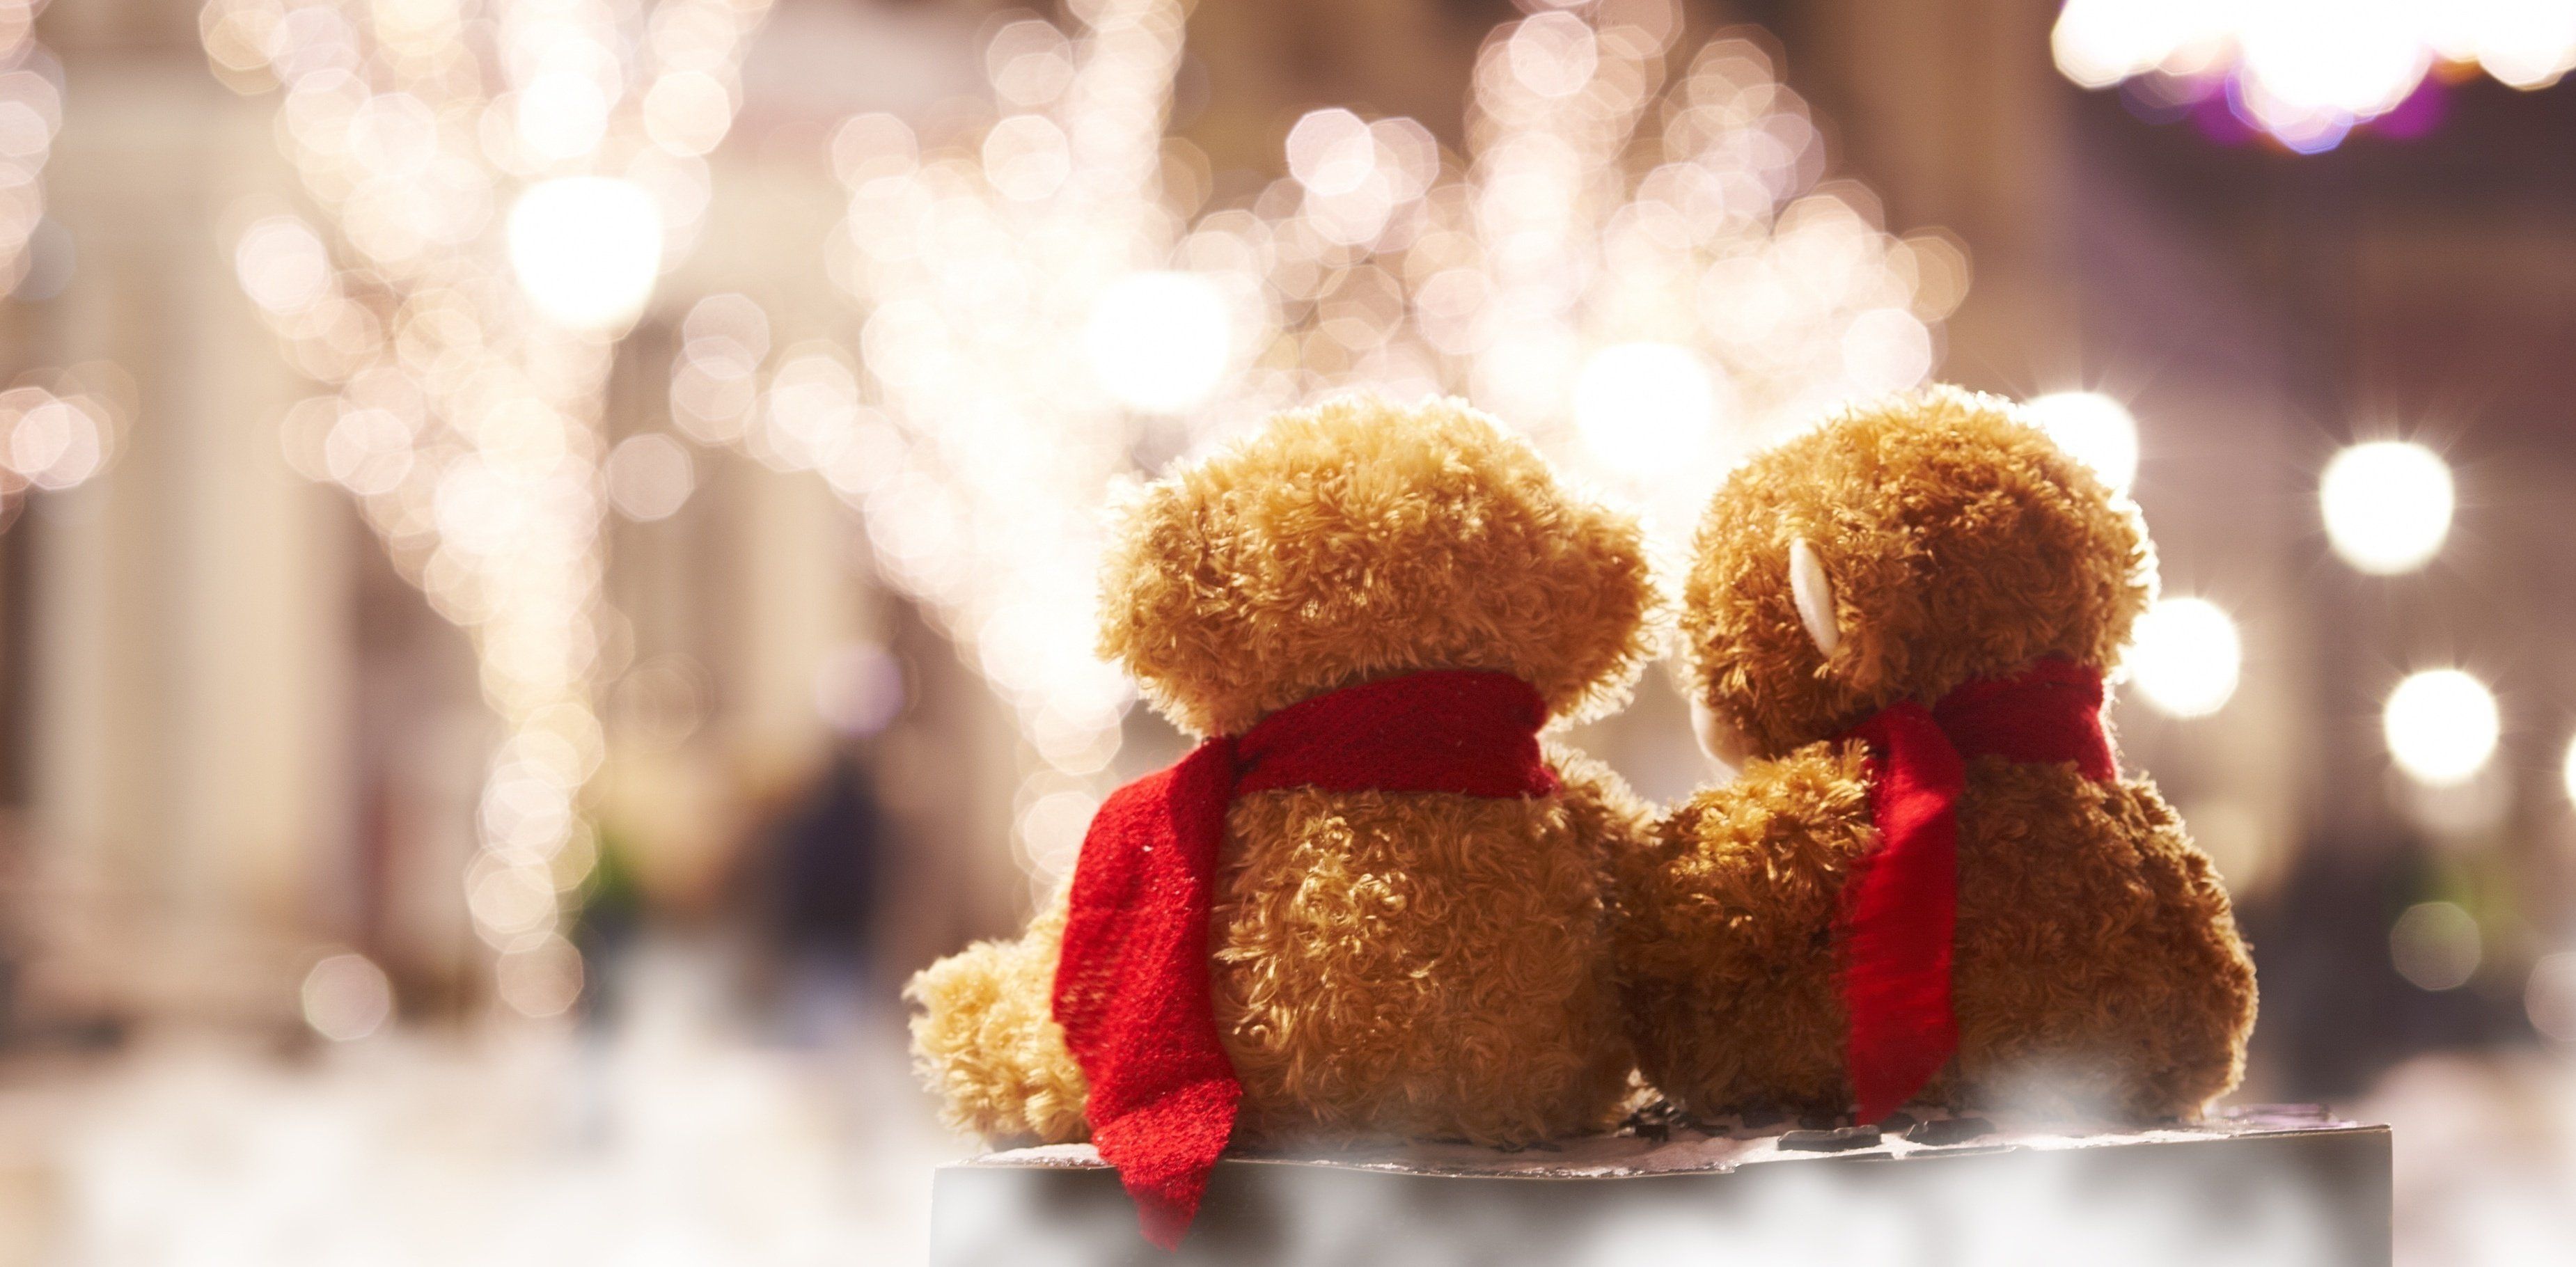 Teddy bear romance together lights love mood toy wallpaper